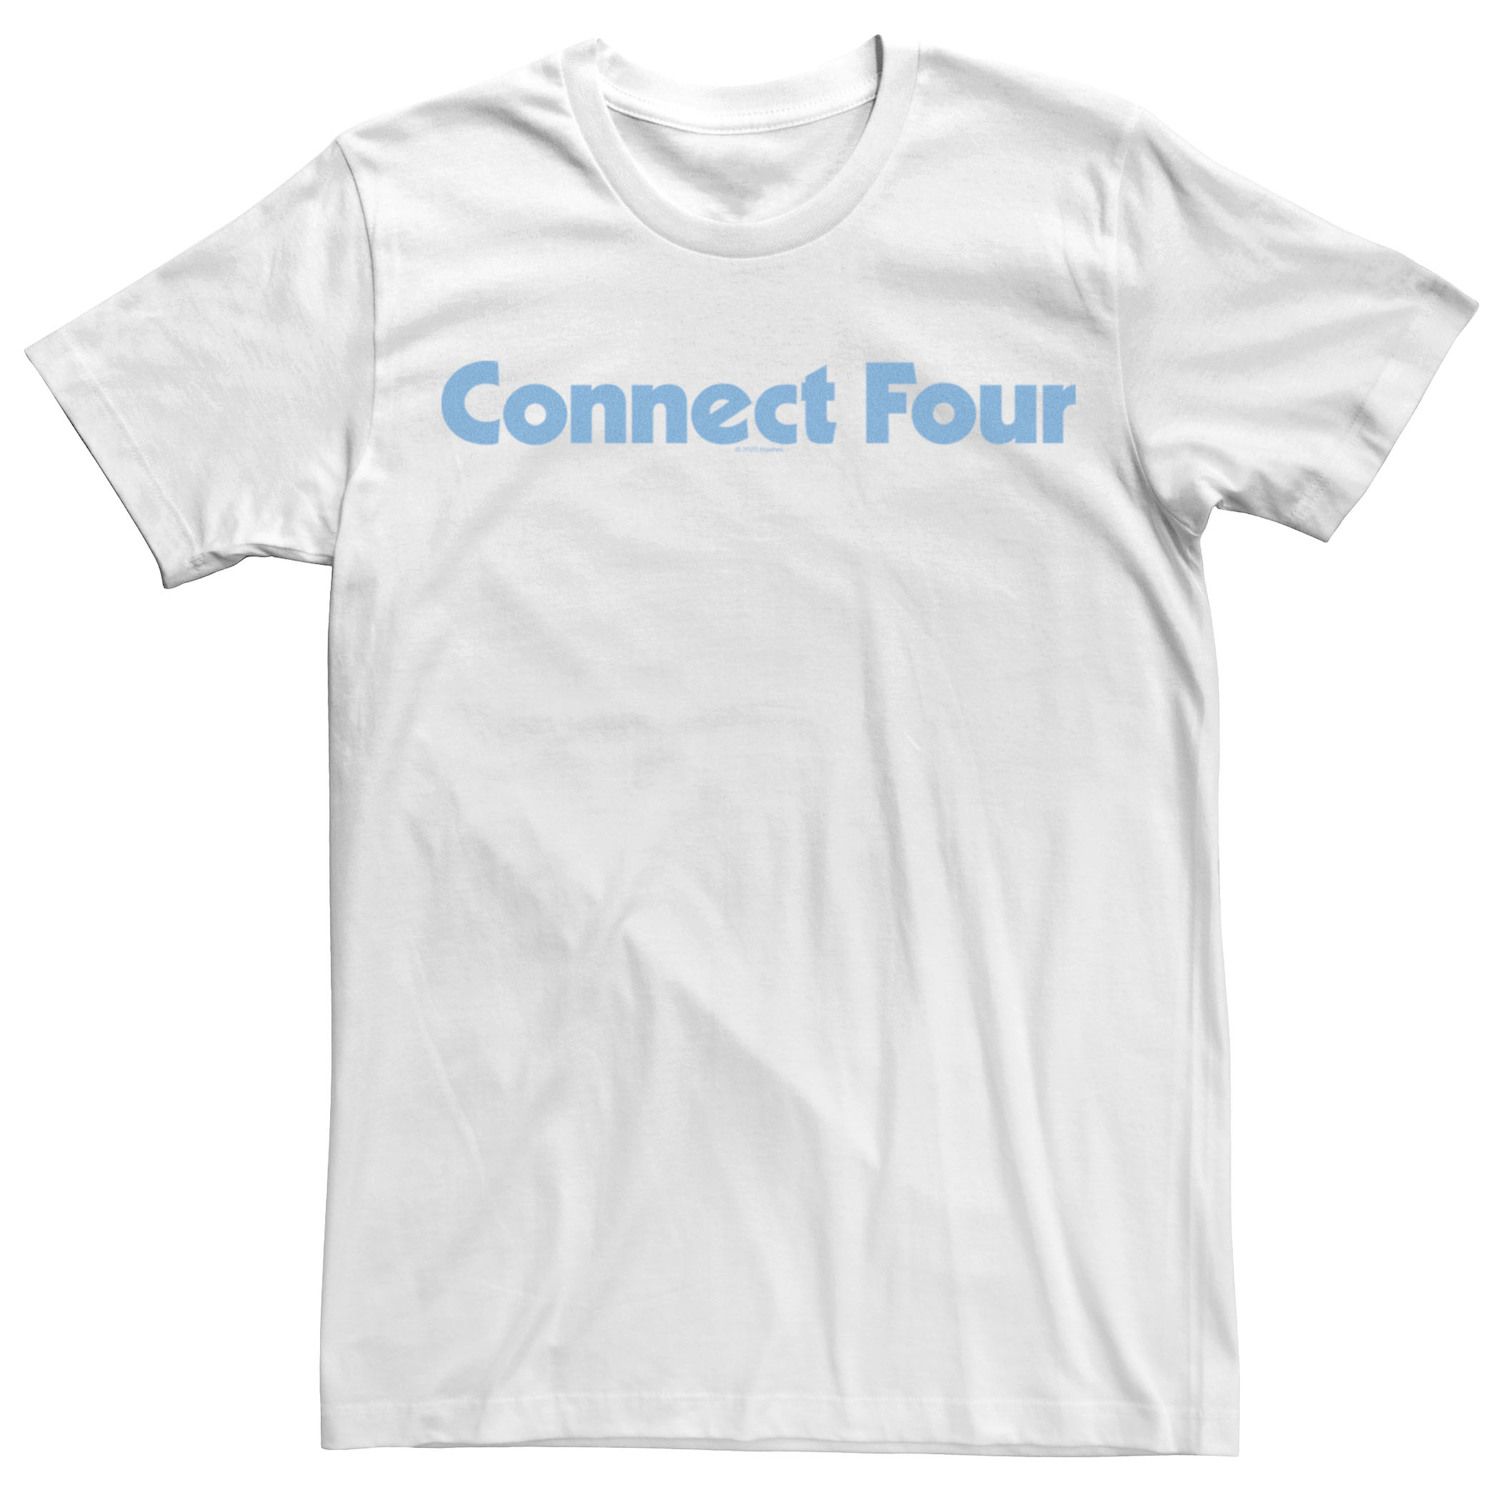 Мужская классическая синяя футболка с логотипом Connect Four Licensed Character